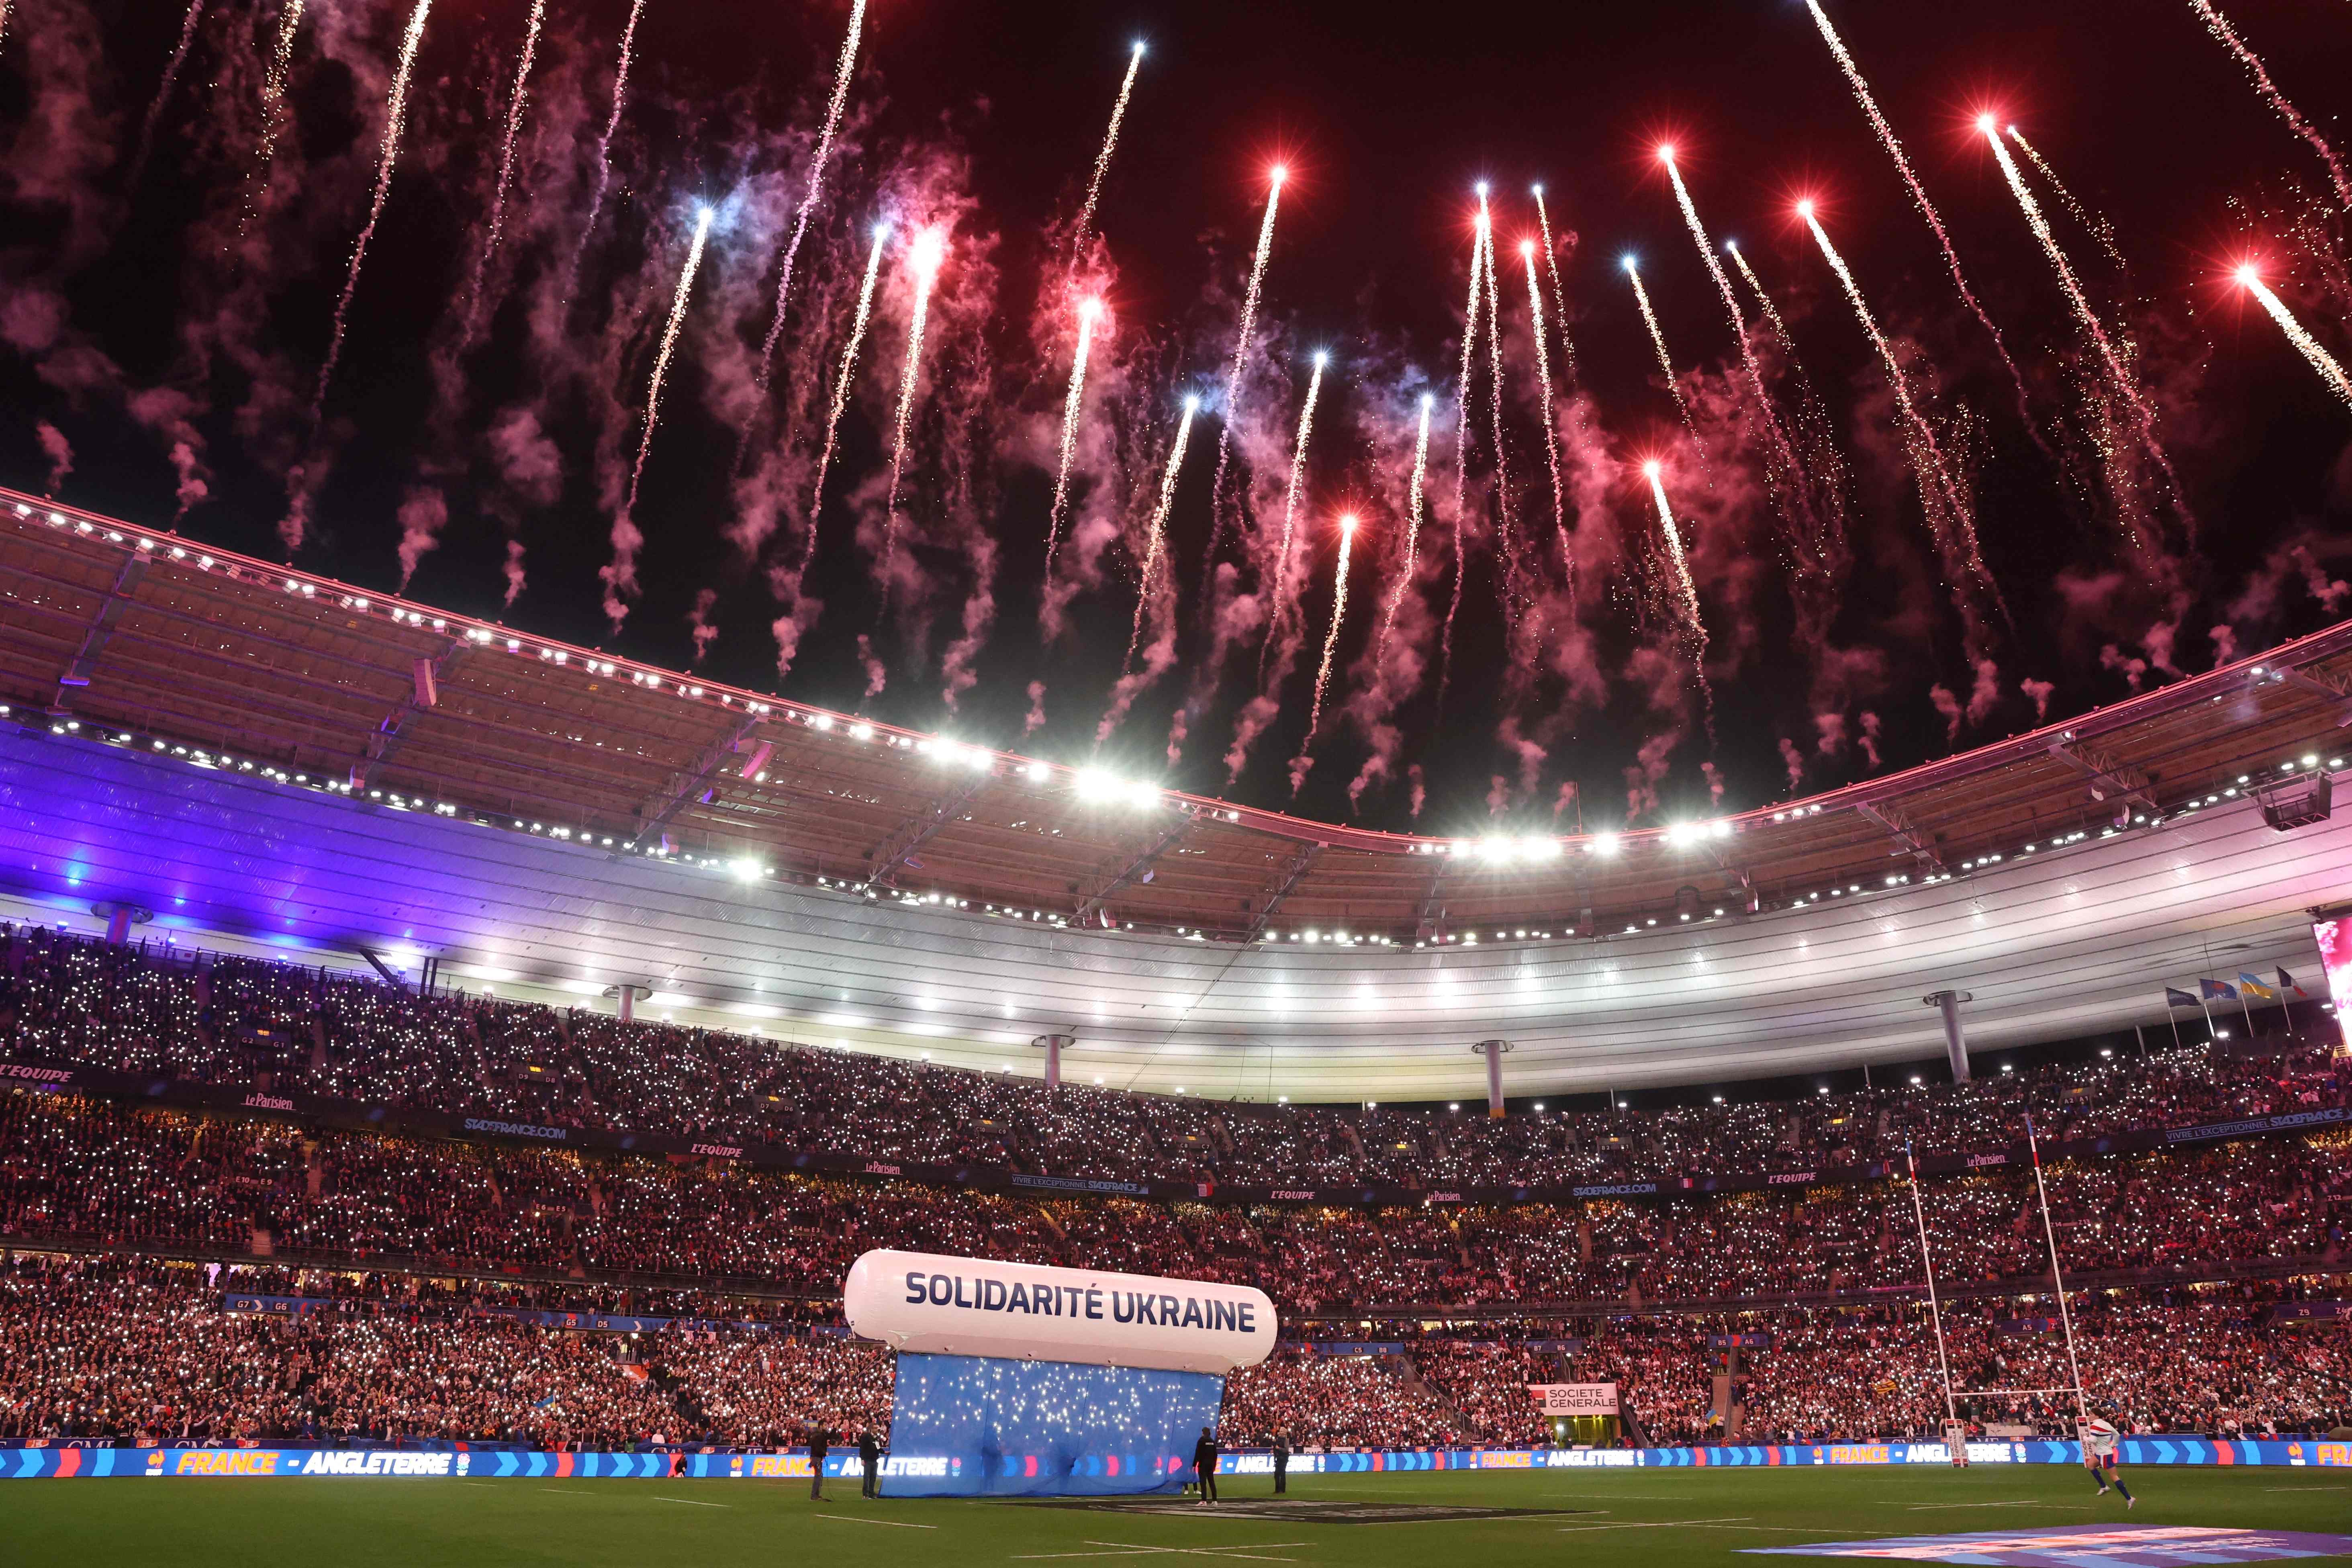 Fireworks light up the night sky above the Stade de France